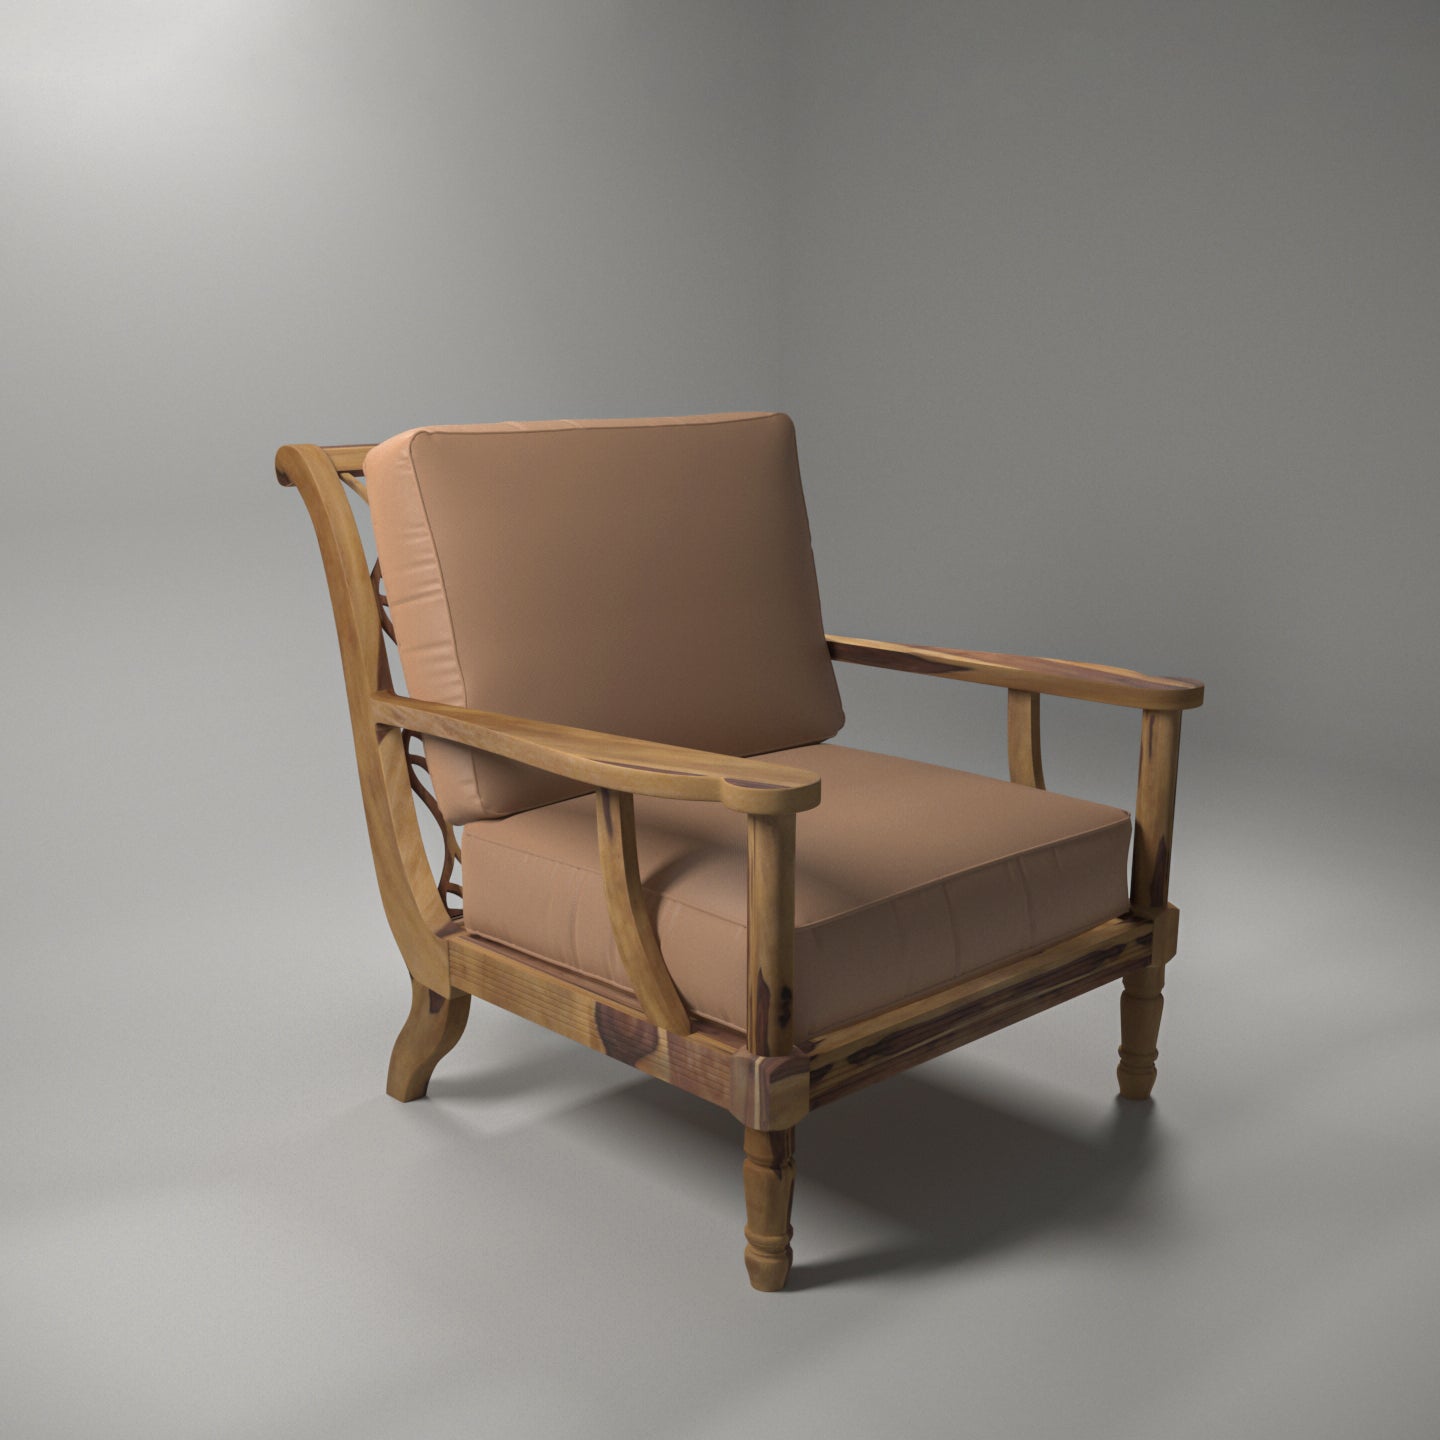 Sheesham wood Contemporary Singe Seater Sofa style arm chair Arm Chair